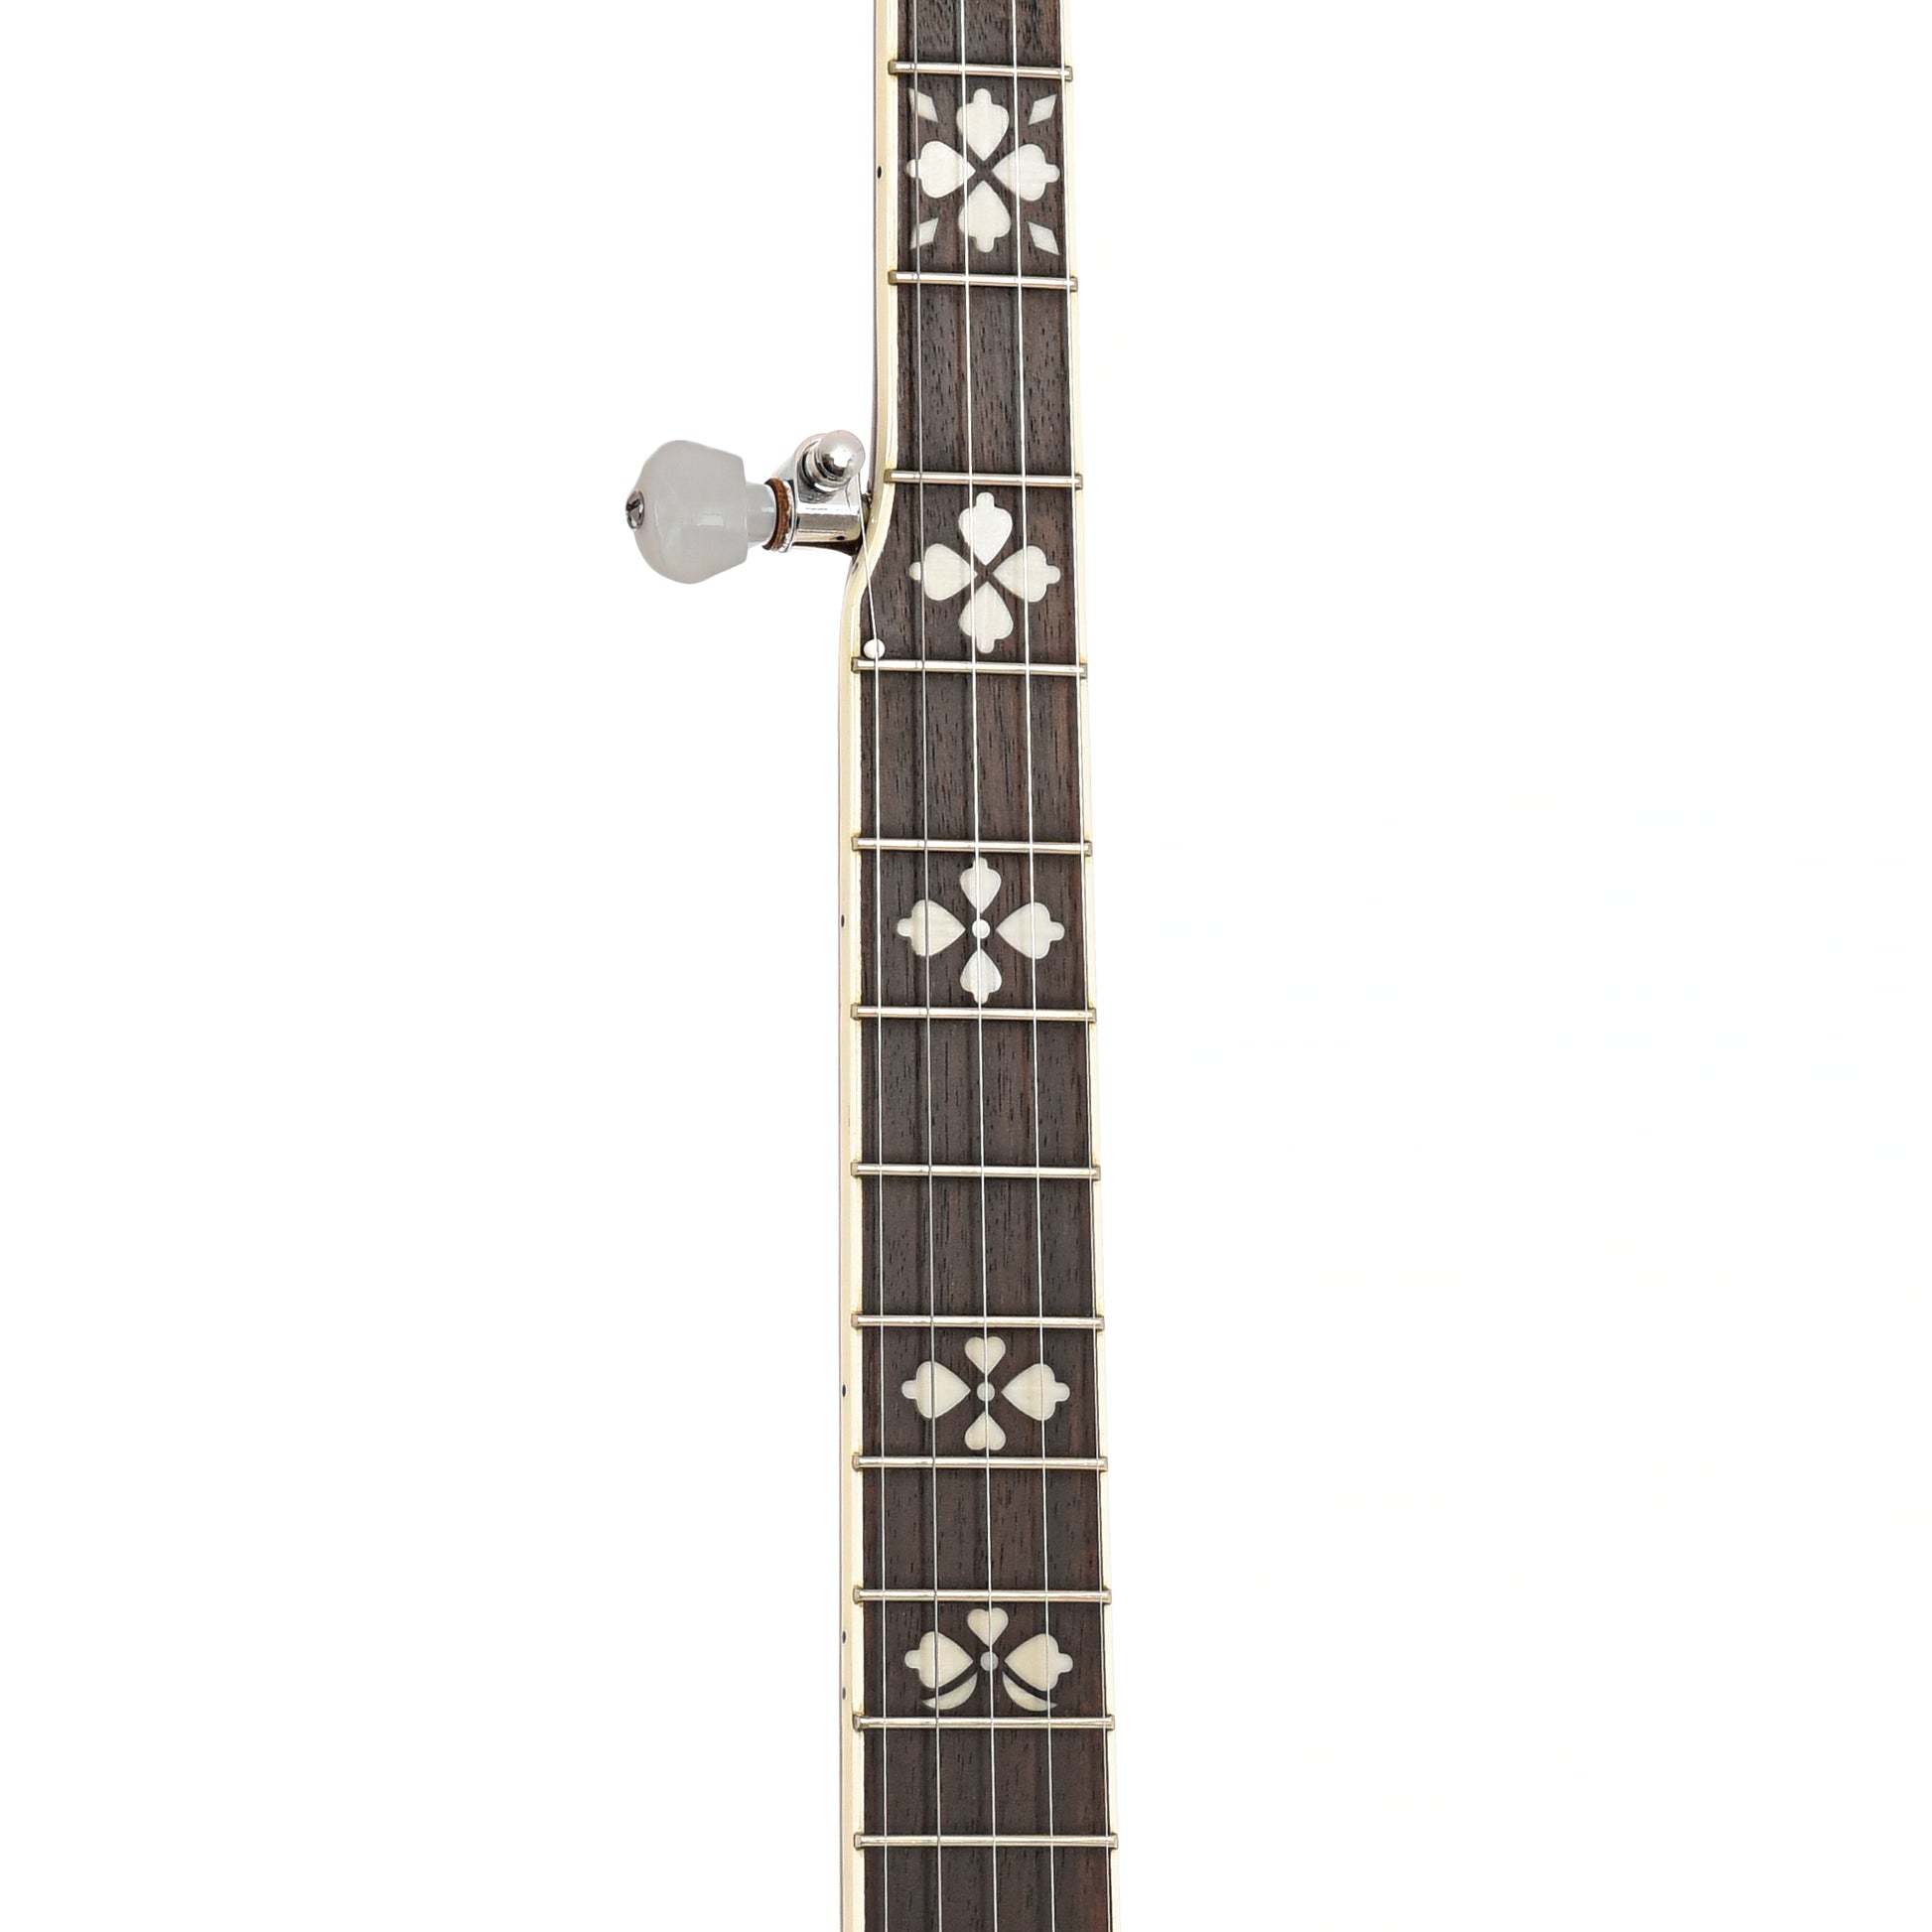 Fretboard of Gold Tone BG-150F Resonator Banjo